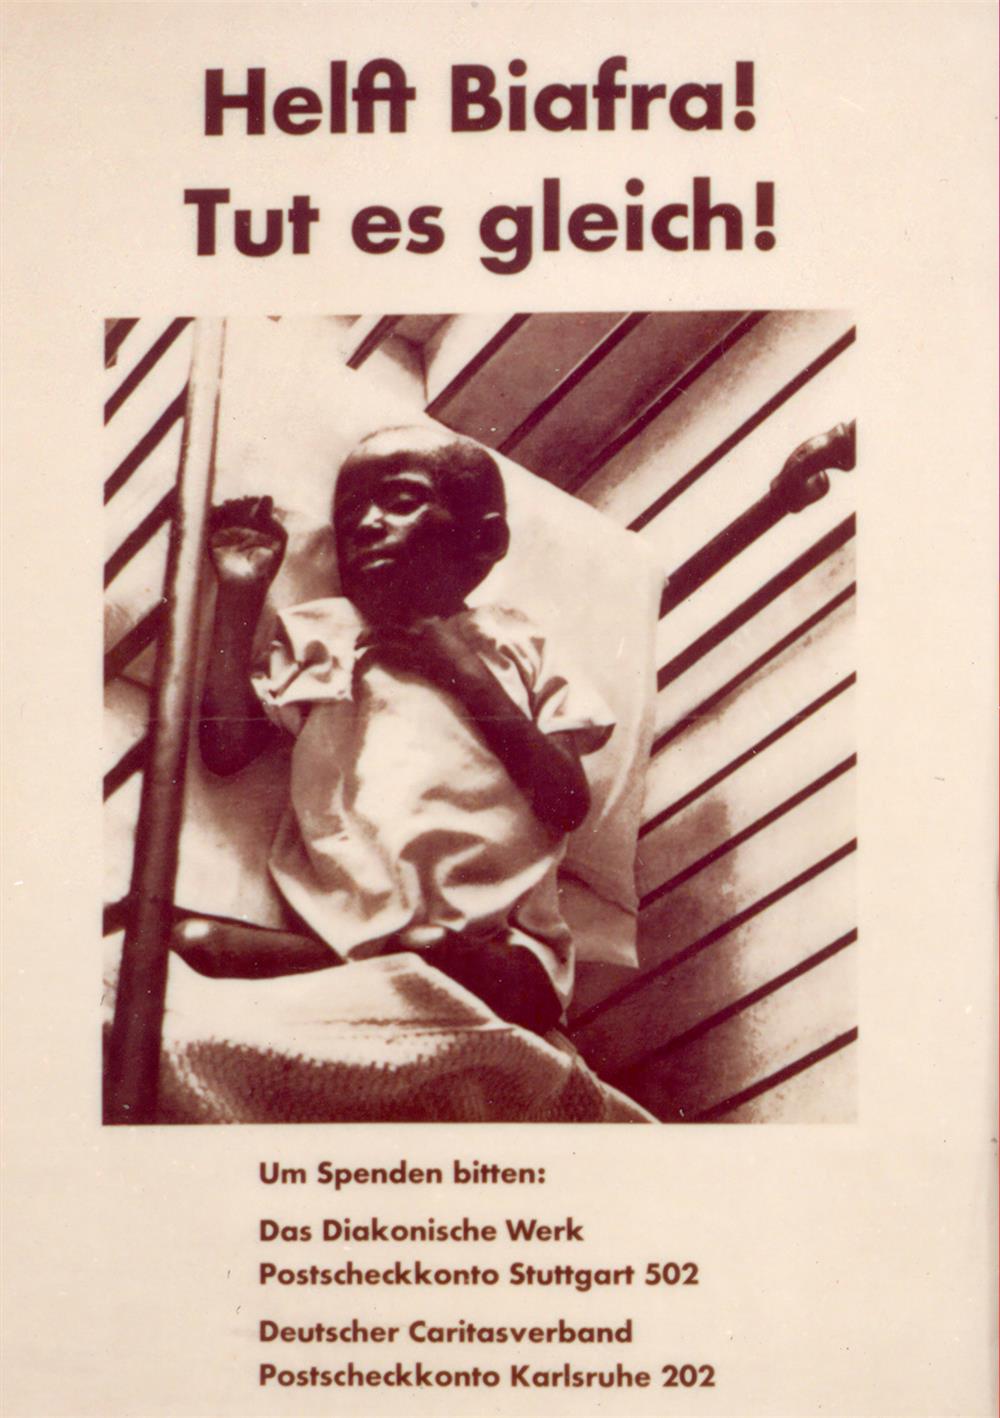 Plakat mit dem Text "Helft Biafra".